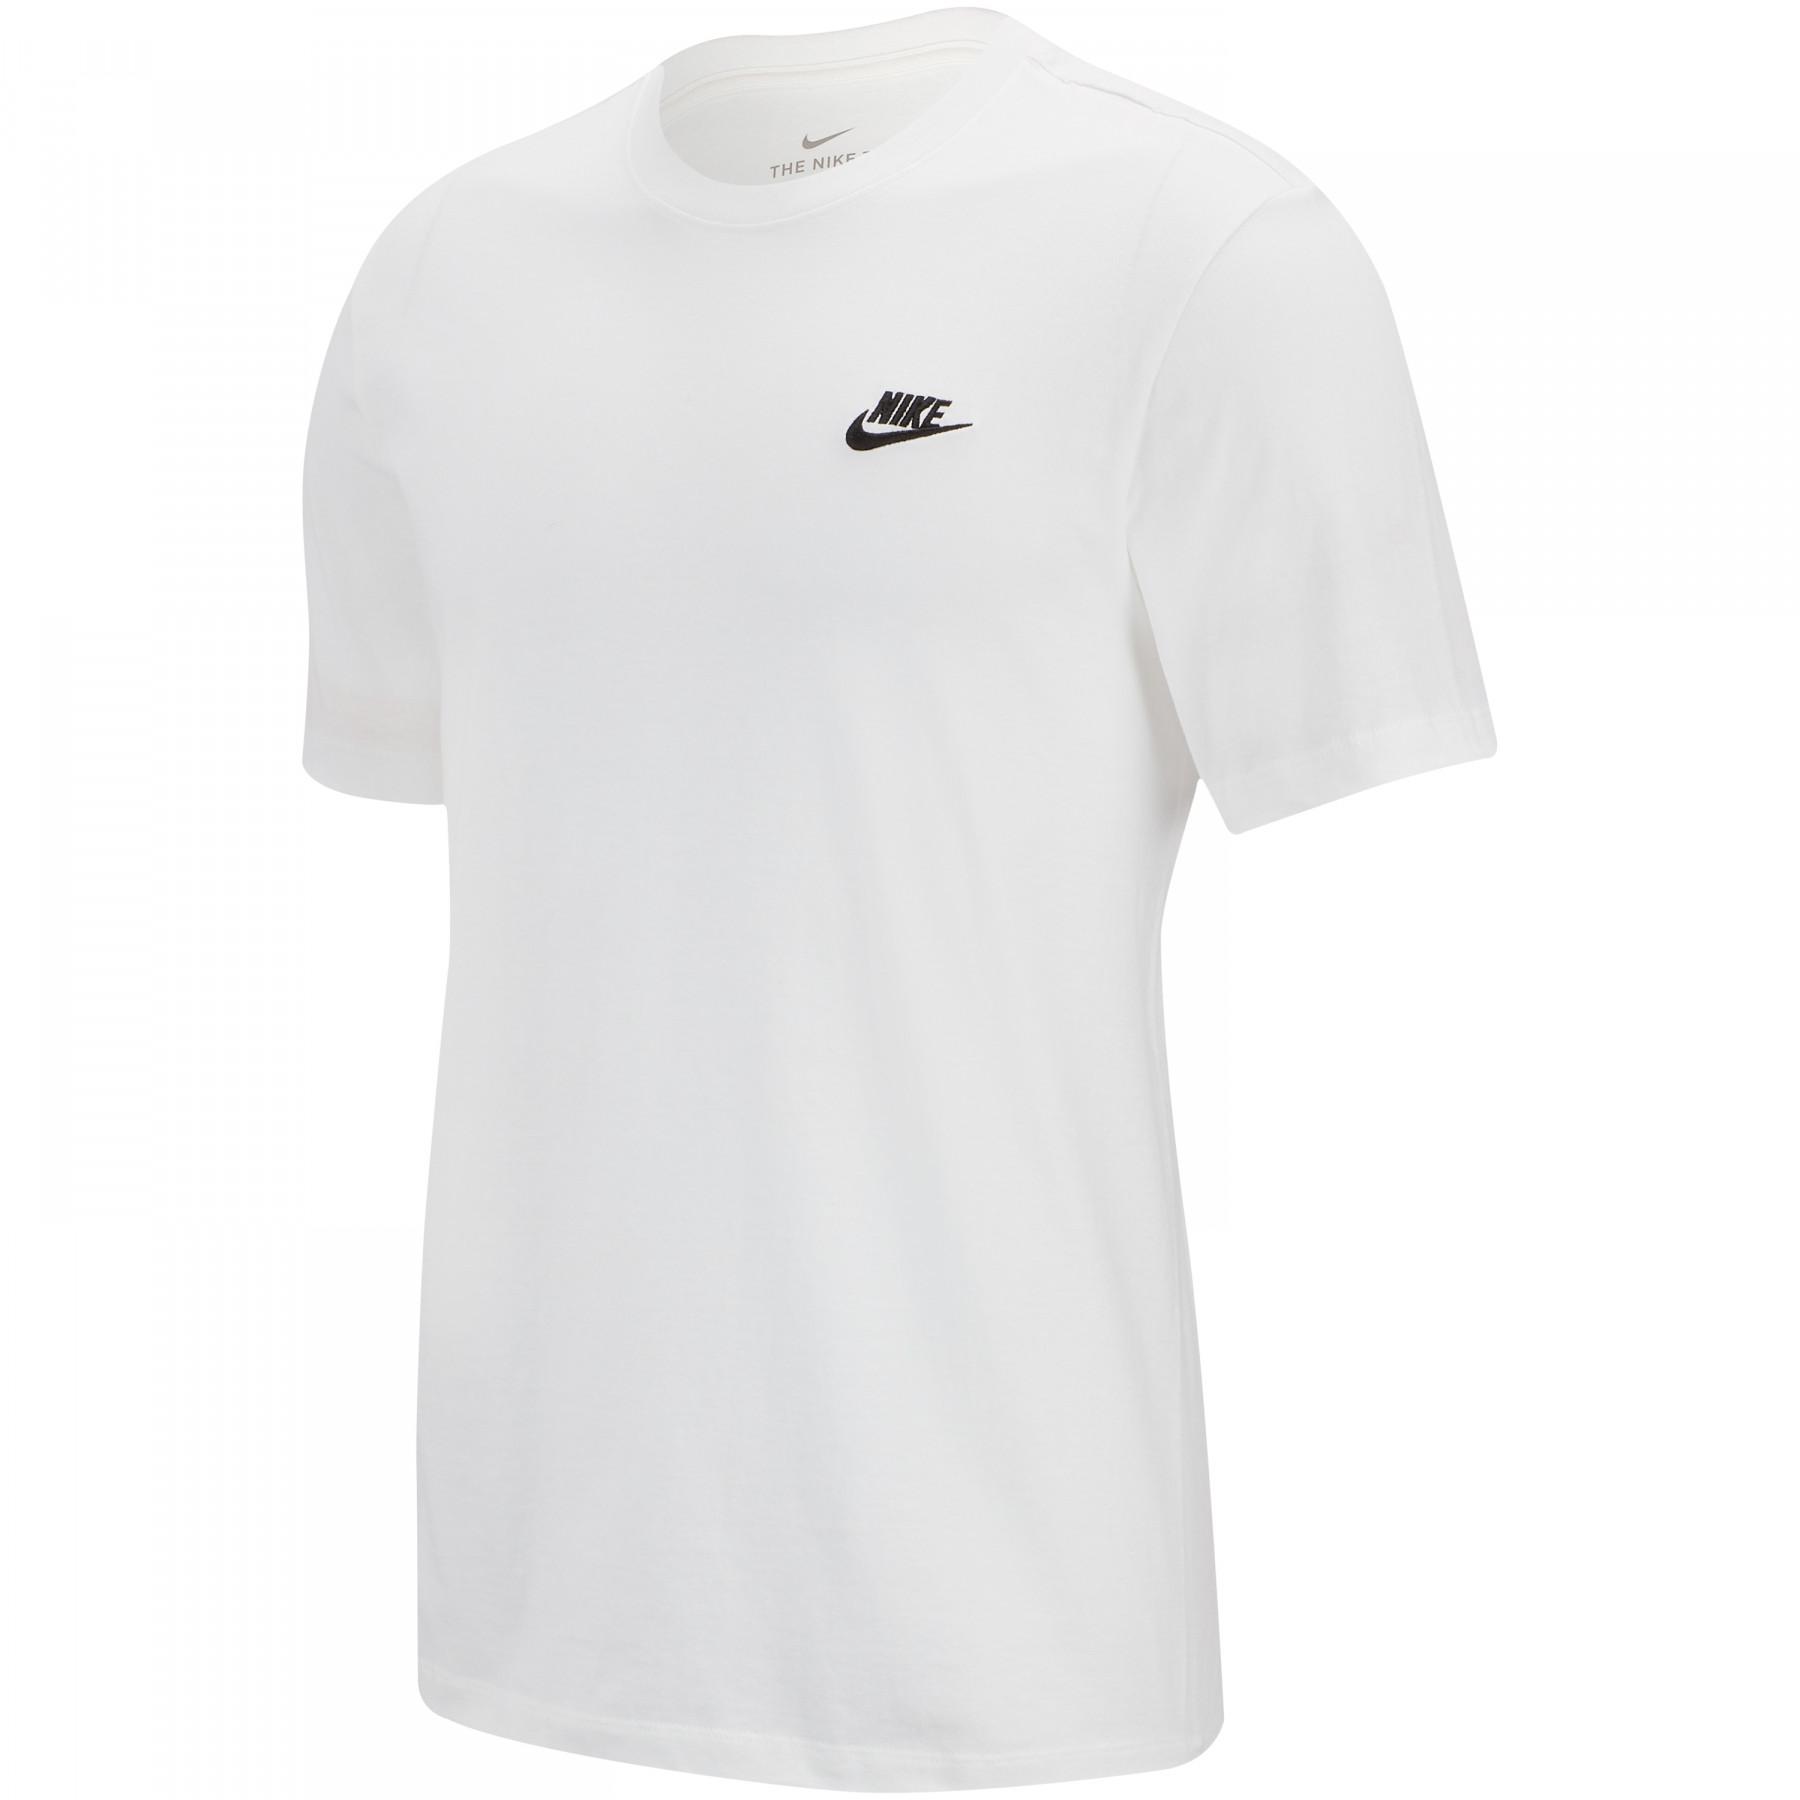 Camiseta Nike Sportswear Club